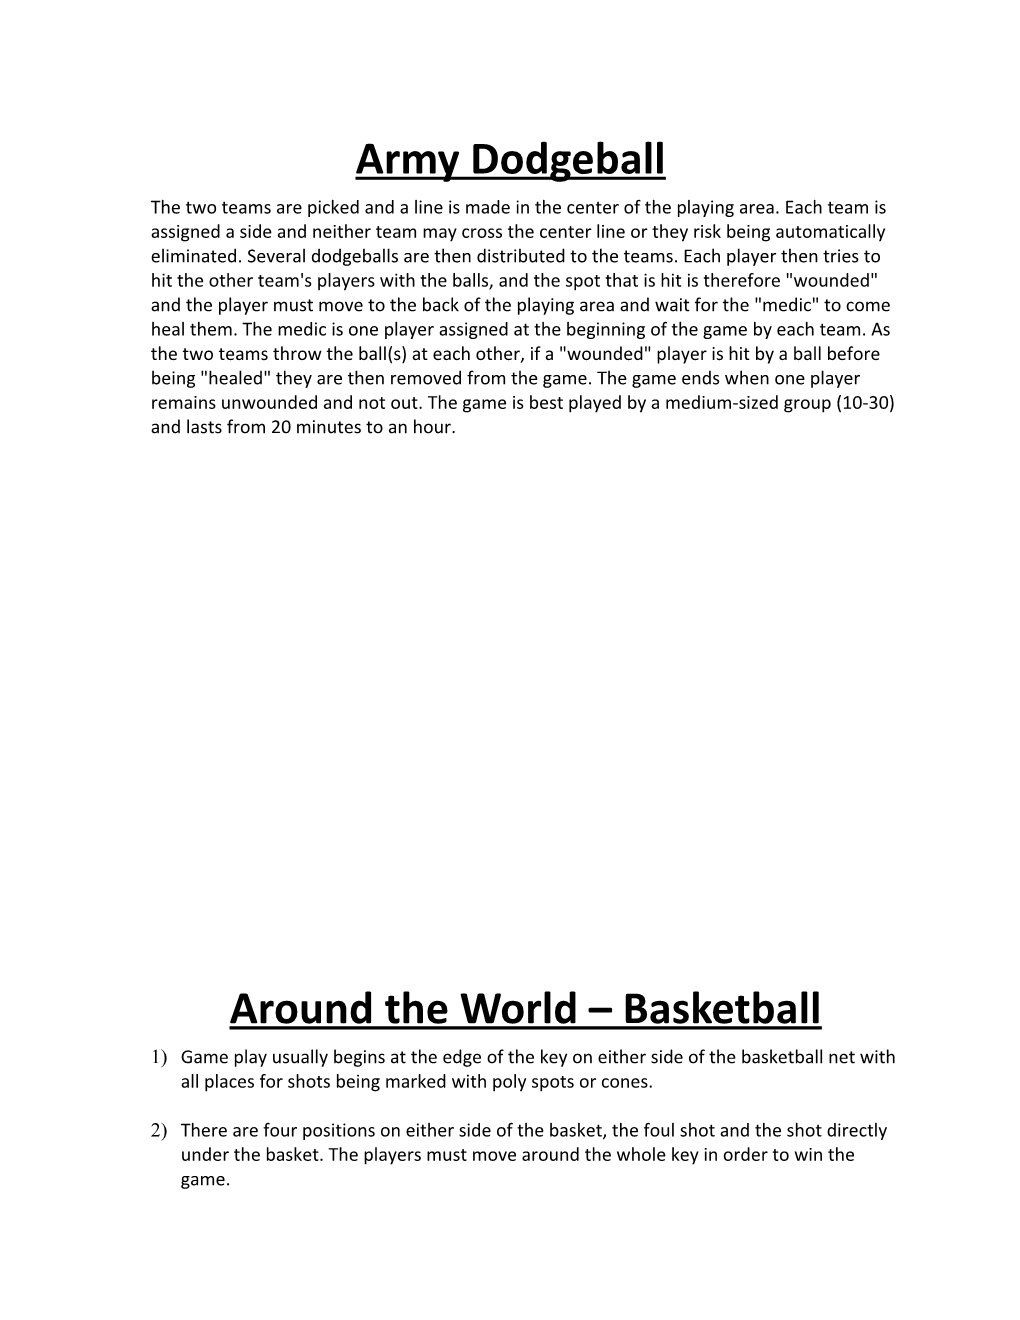 Around the World Basketball